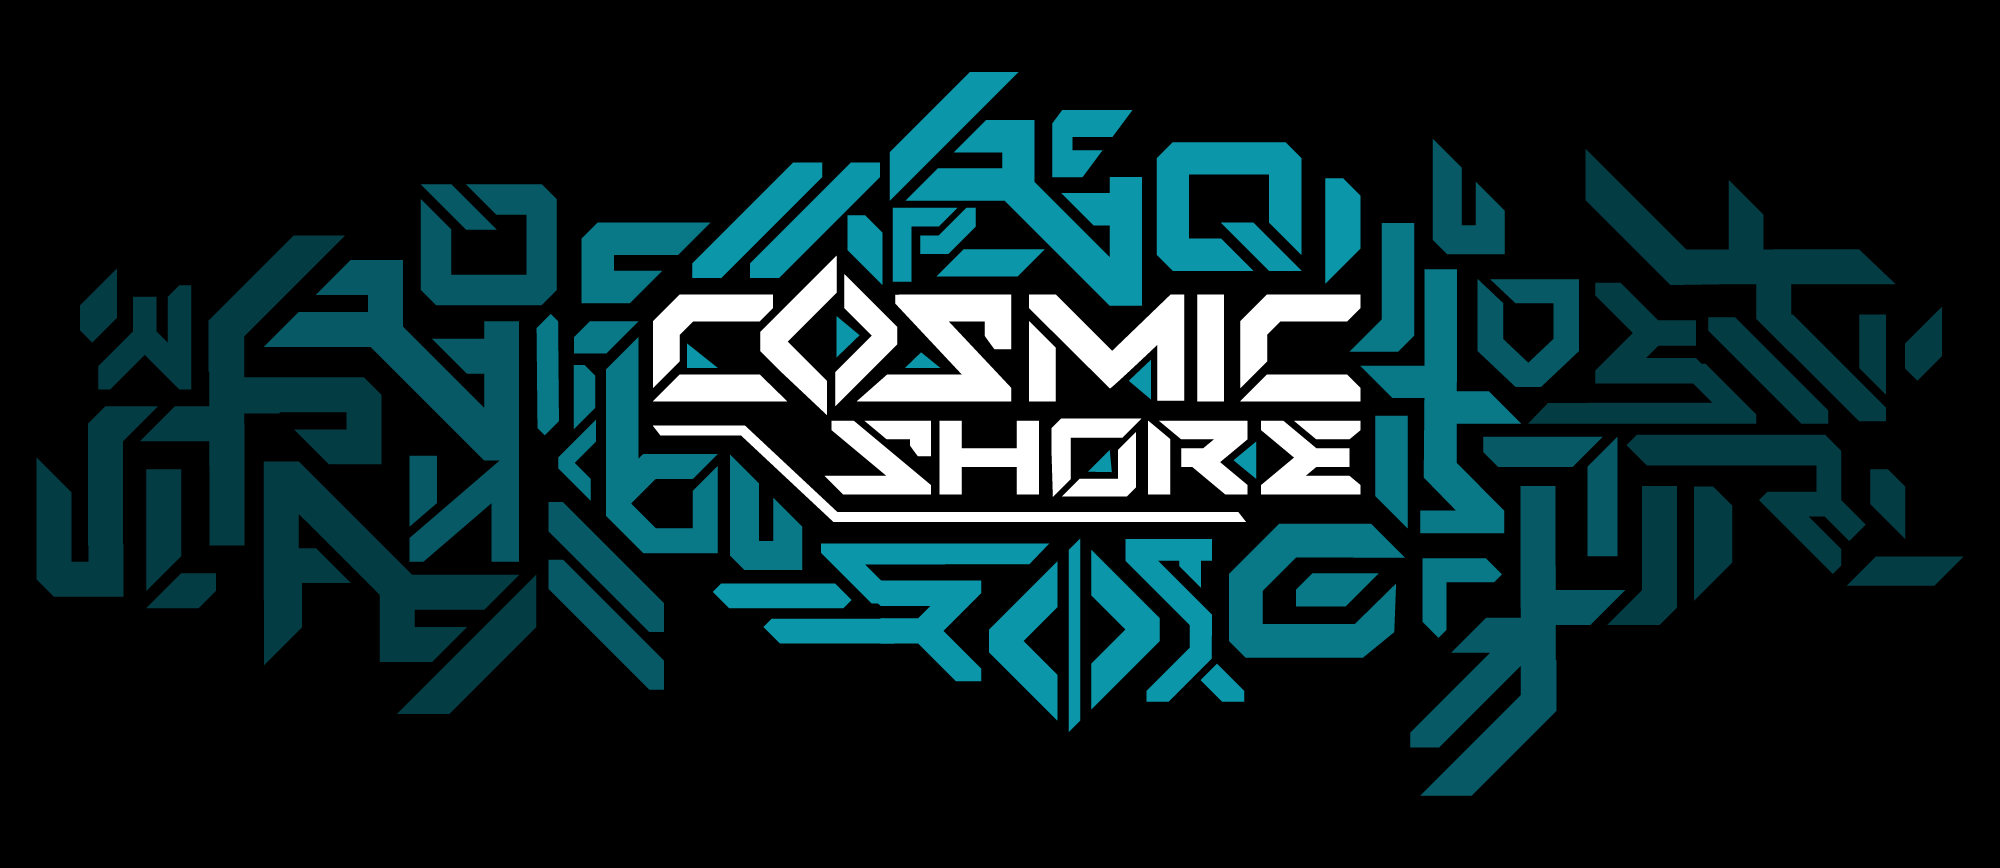 Cosmic Shore